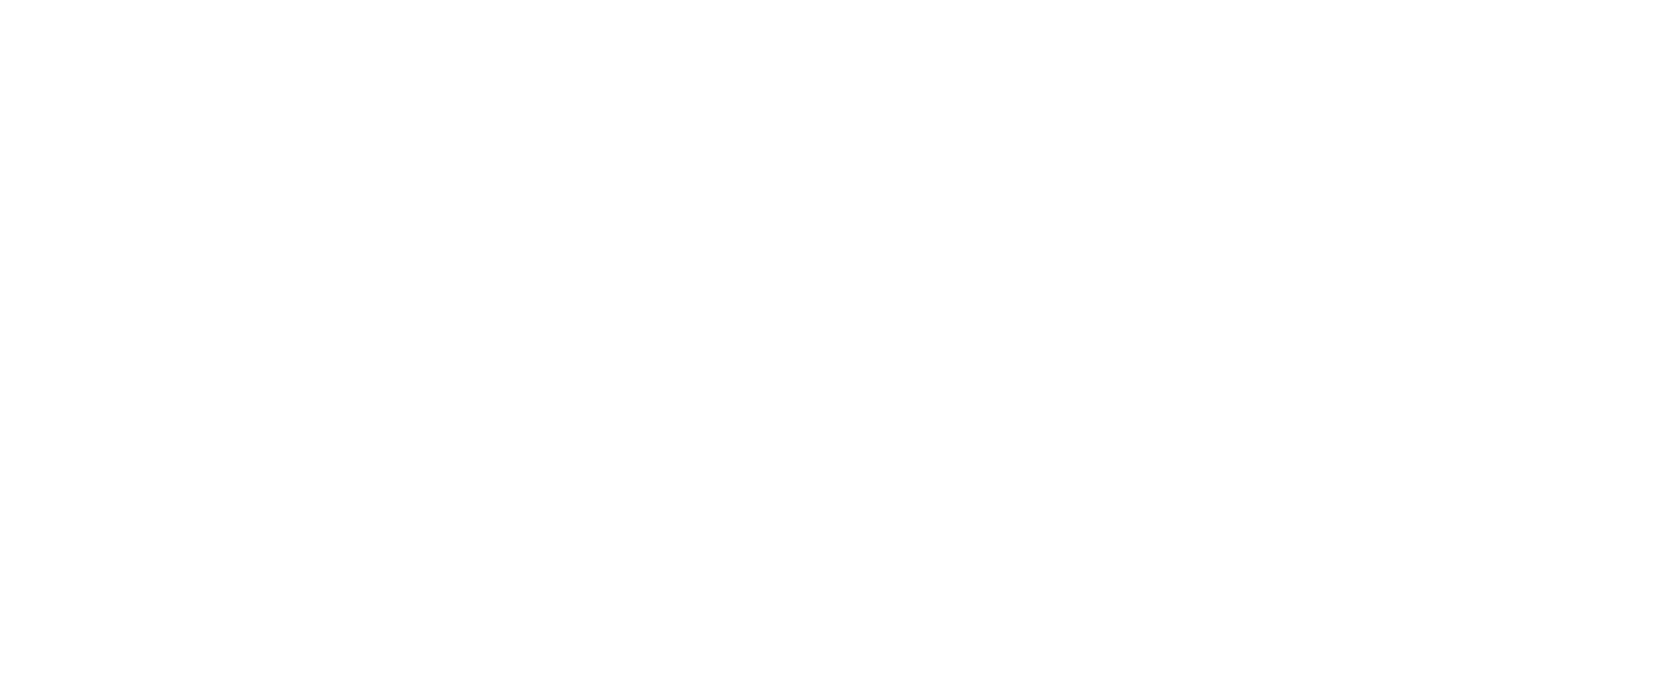 Mykonos Lagoons Damac